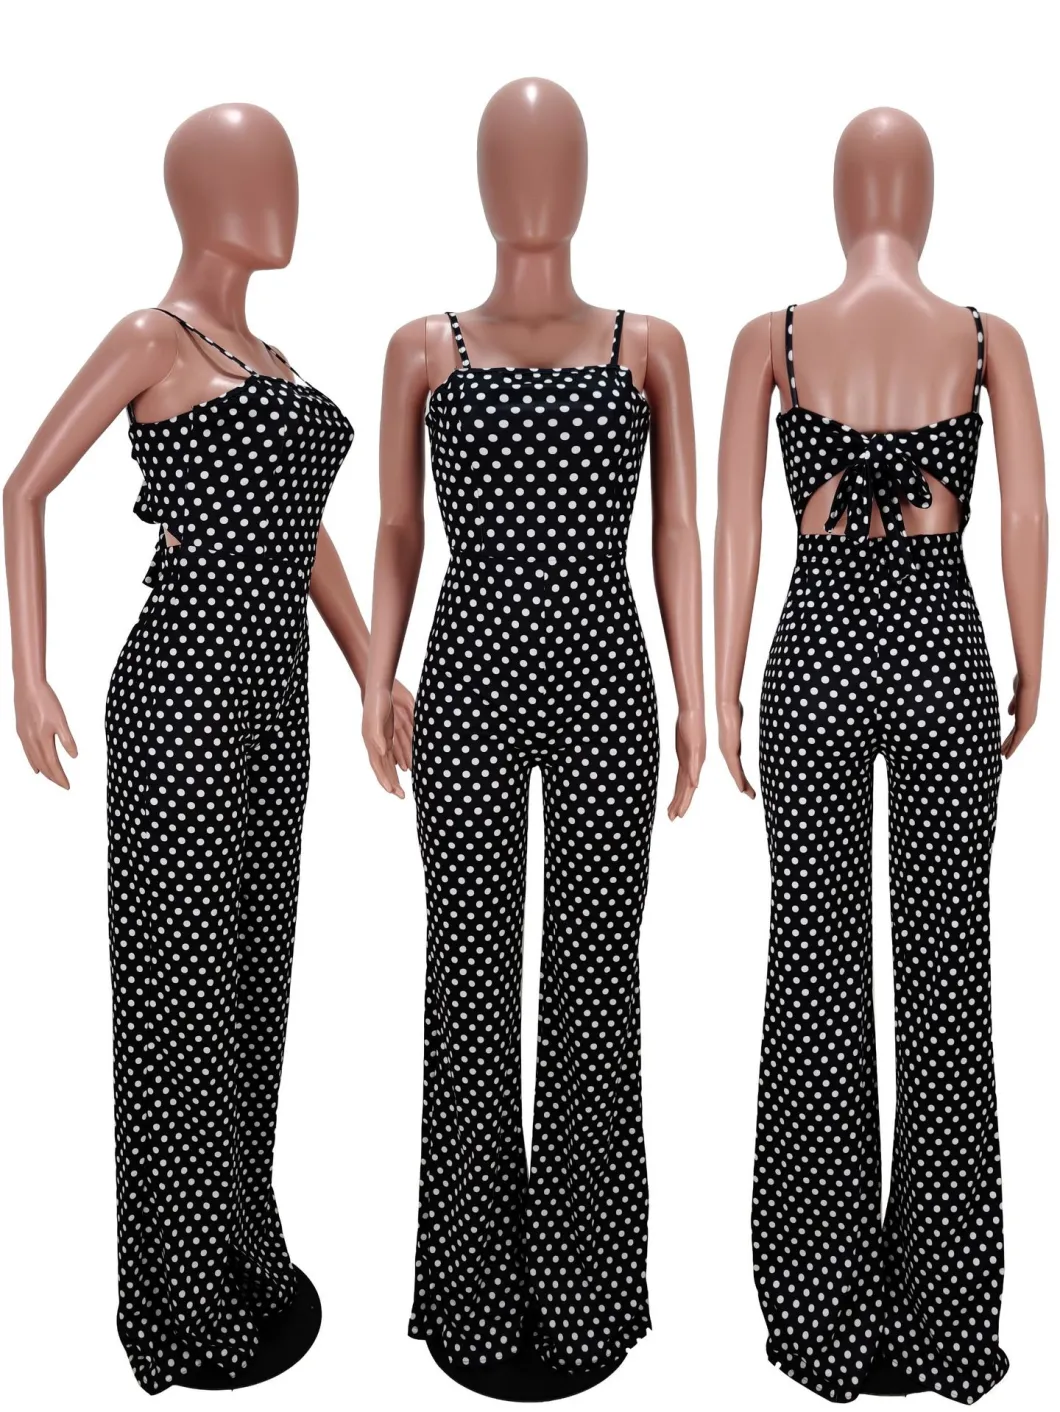 New Commodity Romper Women Polka Dots Elegant Jumpsuit Full Length One Shoulder Backless Womens Jumpsuits